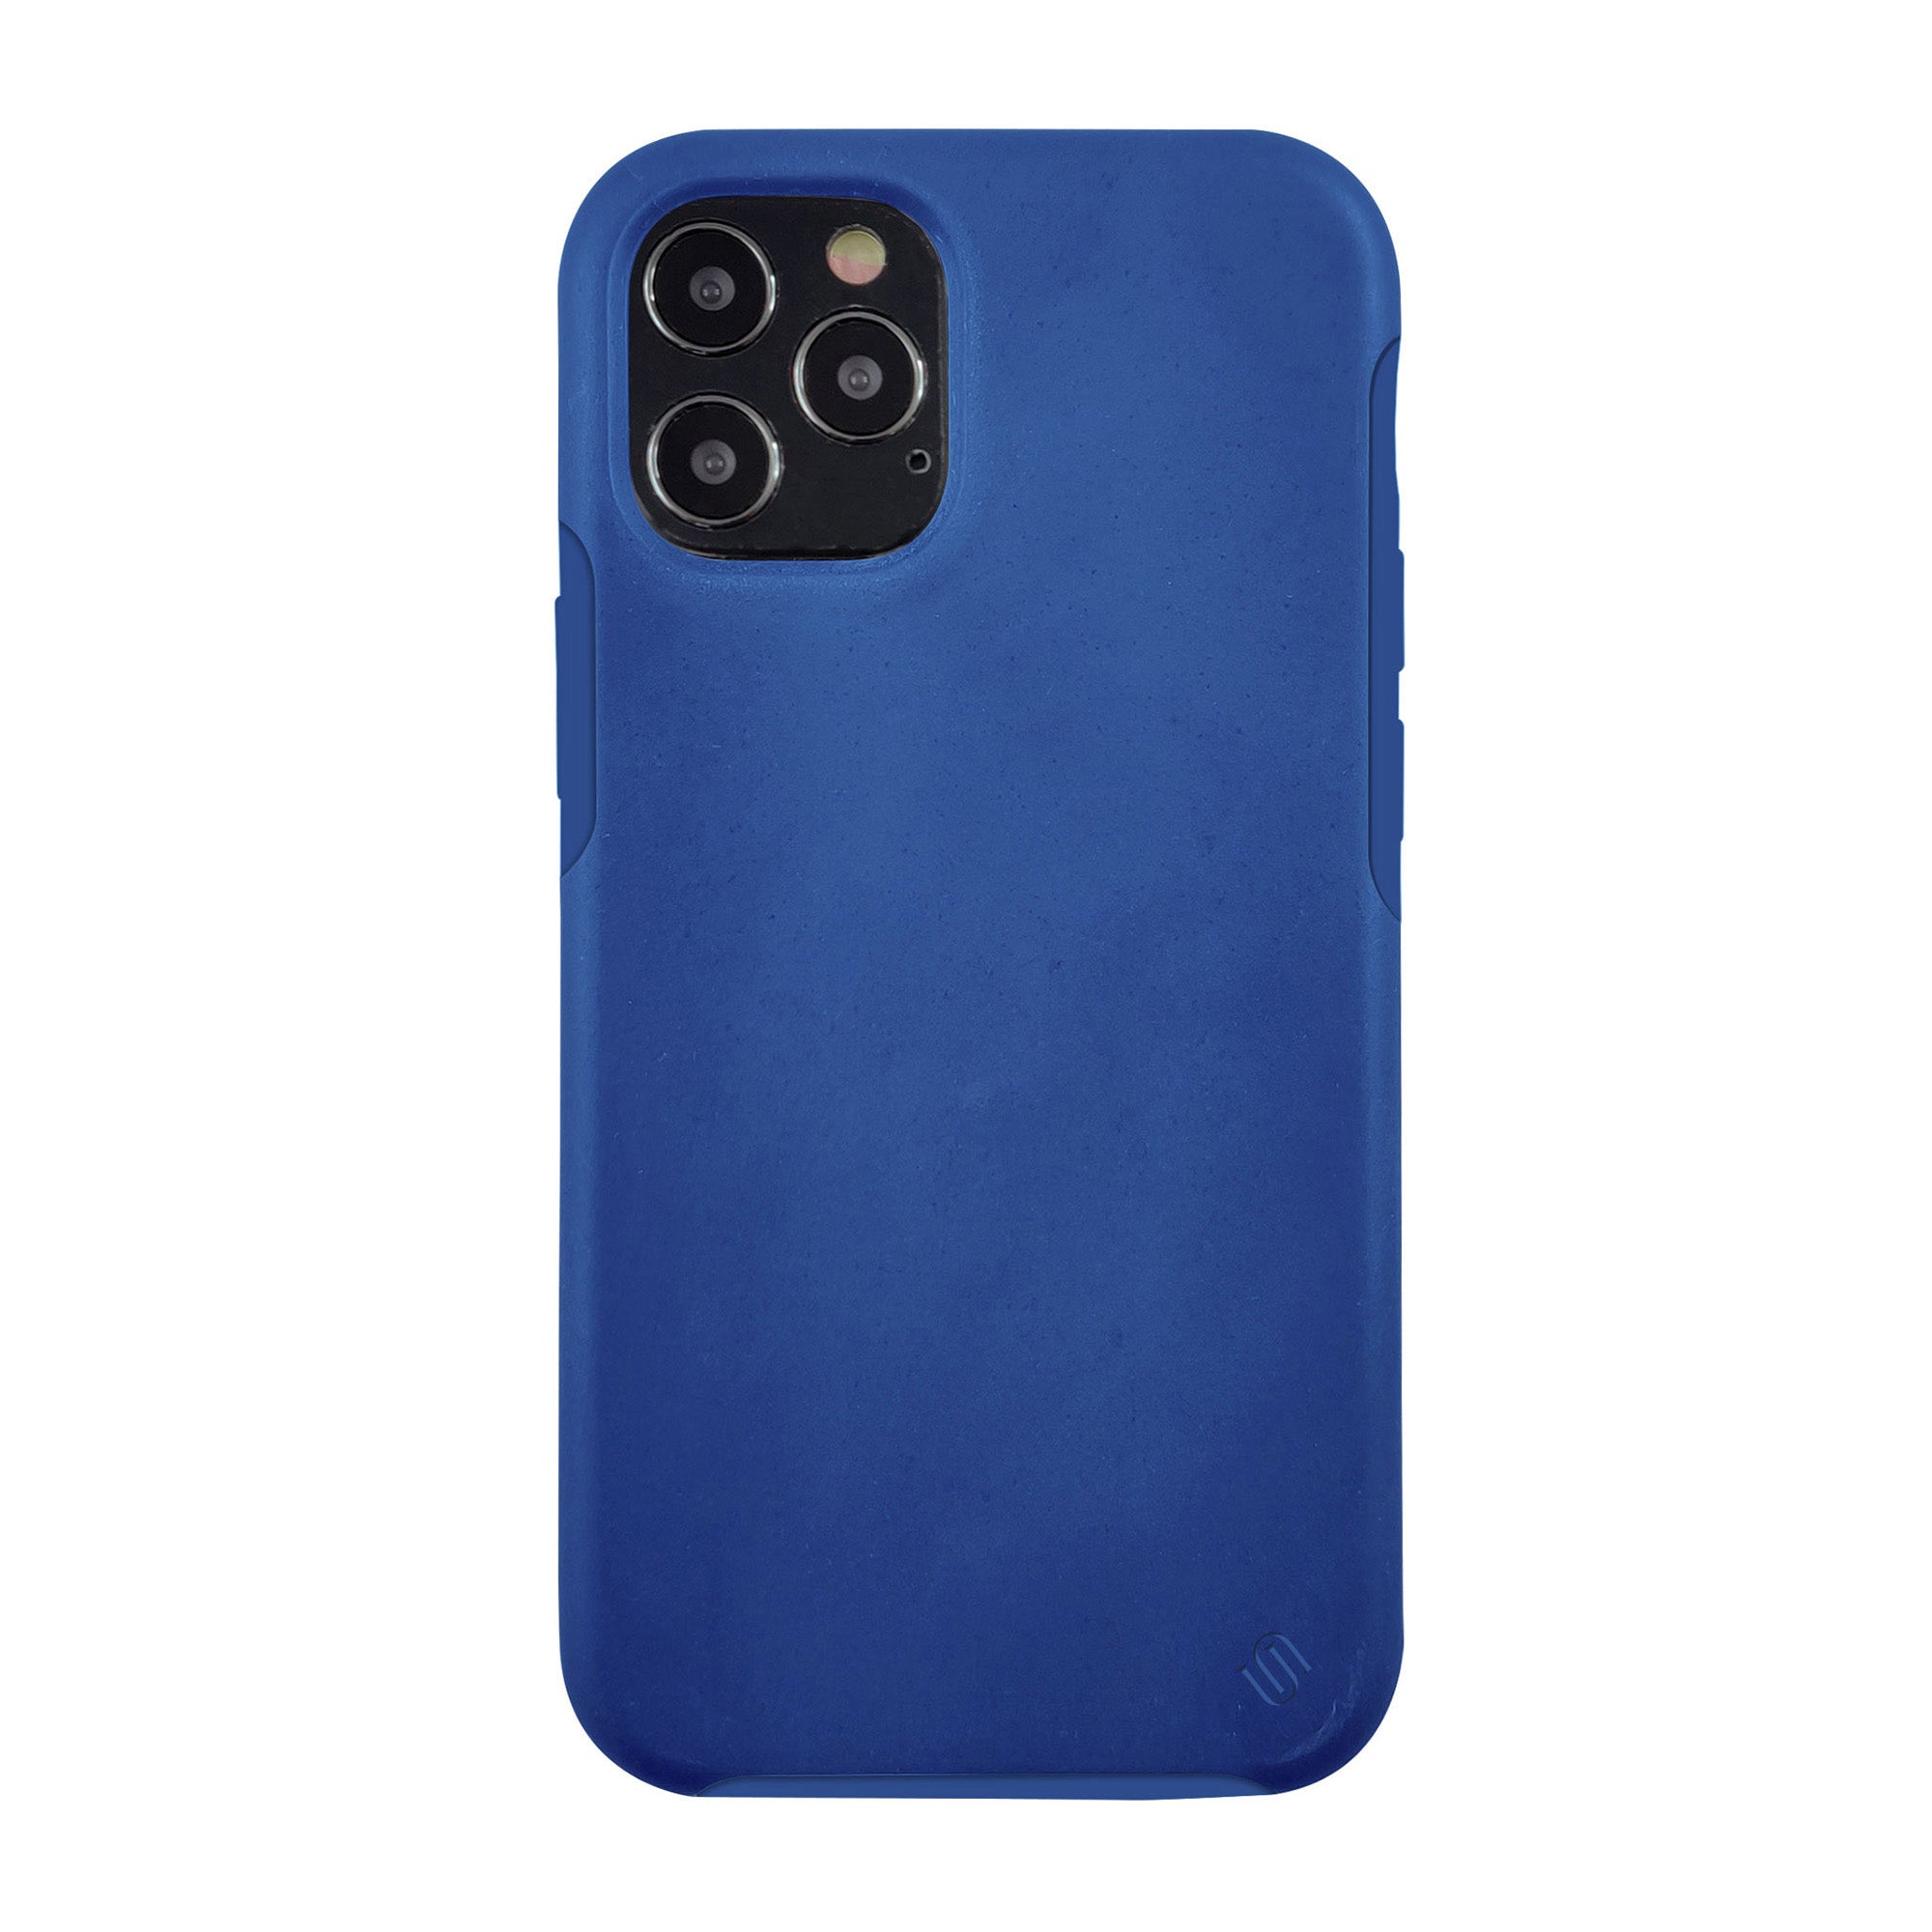 iPhone 12 Pro Max Uunique Blue Ocean Nutrisiti Eco Guard Back Case - 15-07637